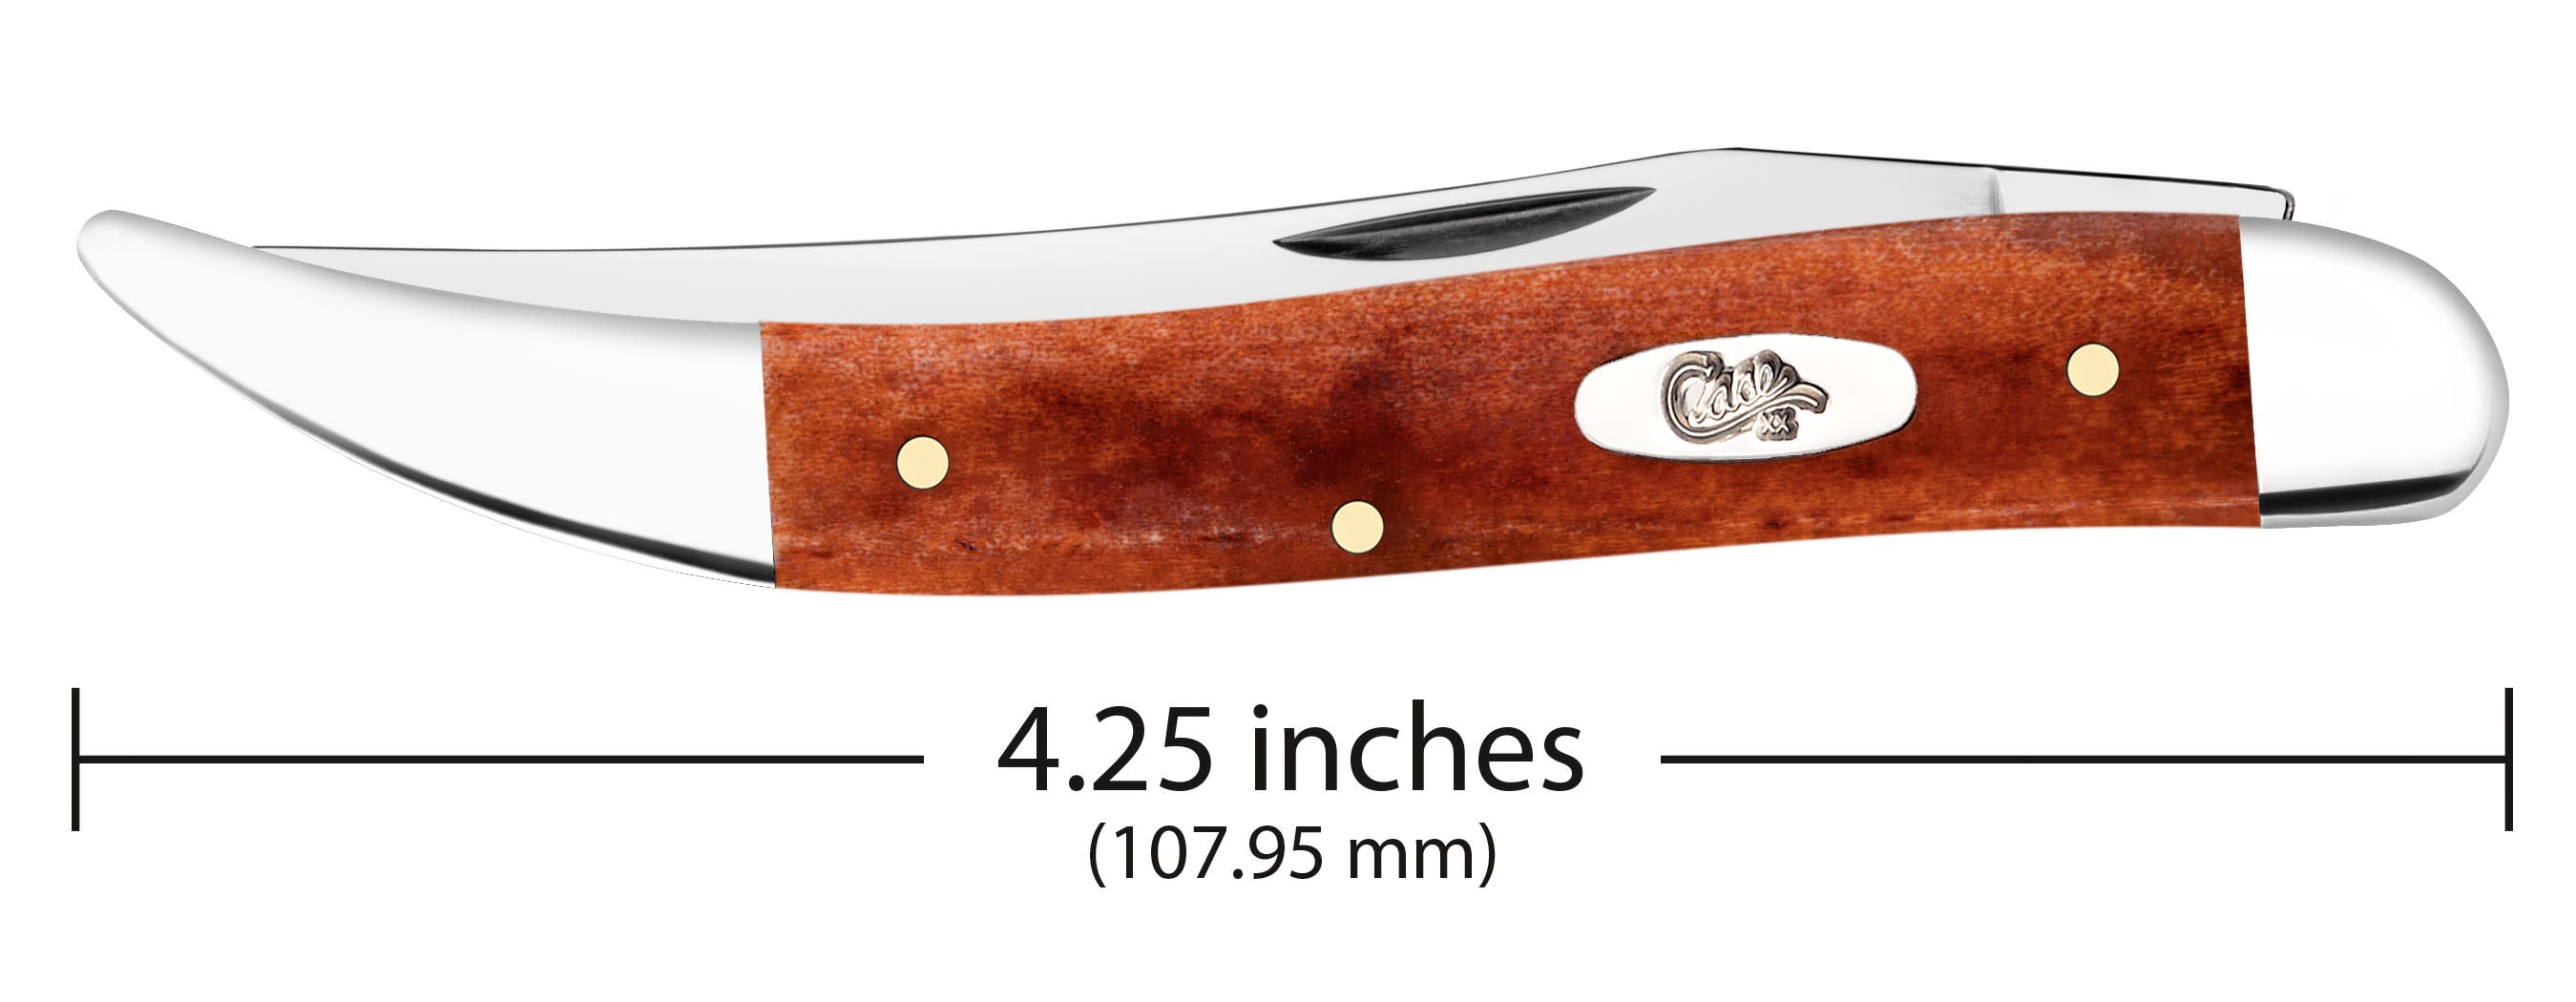 Smooth Chestnut Bone Medium Texas Toothpick Knife Dimensions